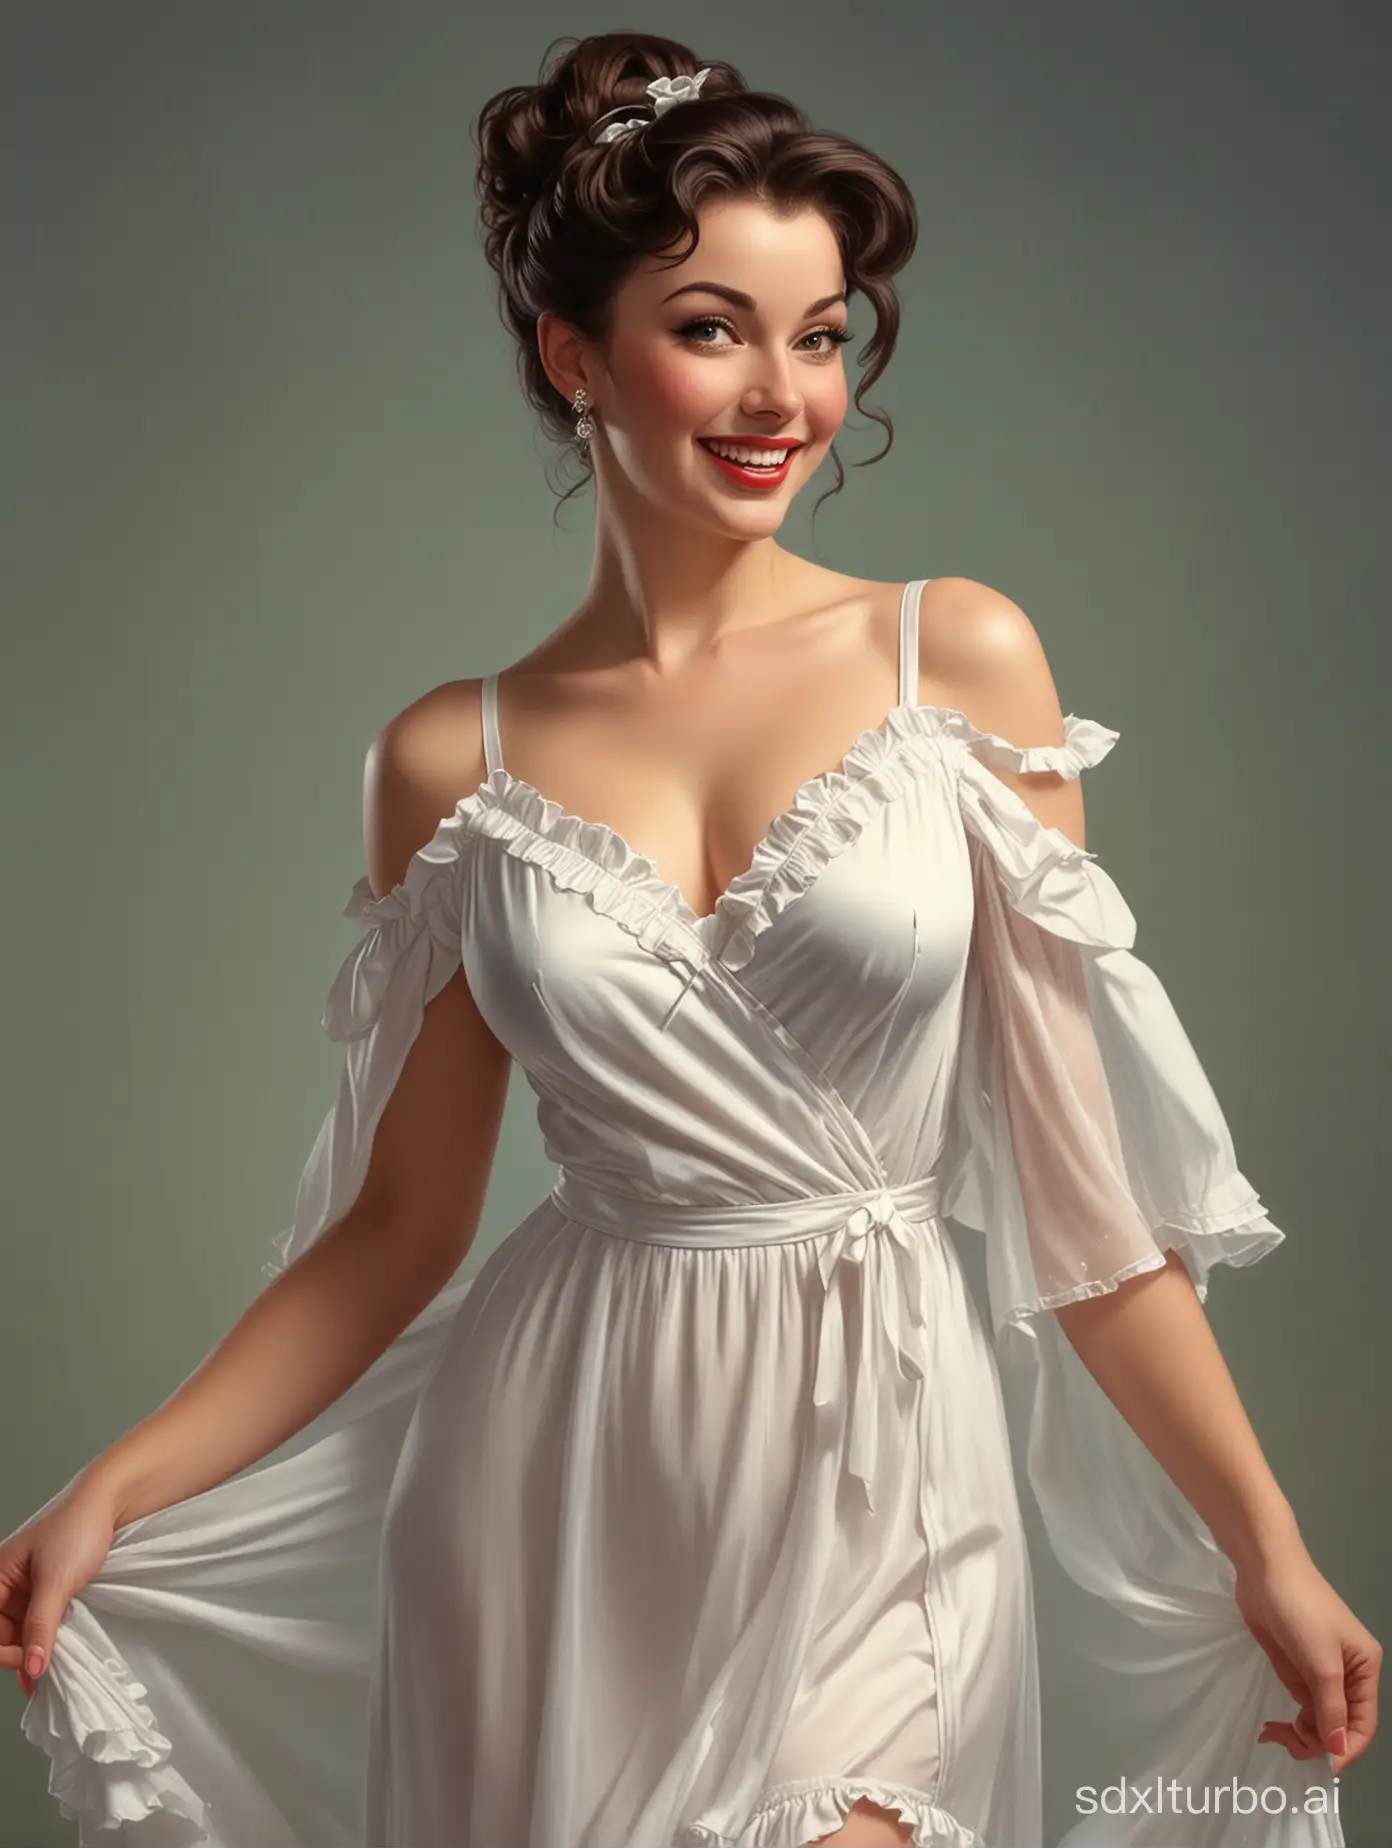 Playful-Woman-in-White-Nightgown-Vintage-Burlesque-Portrait-by-Gil-Elvgren